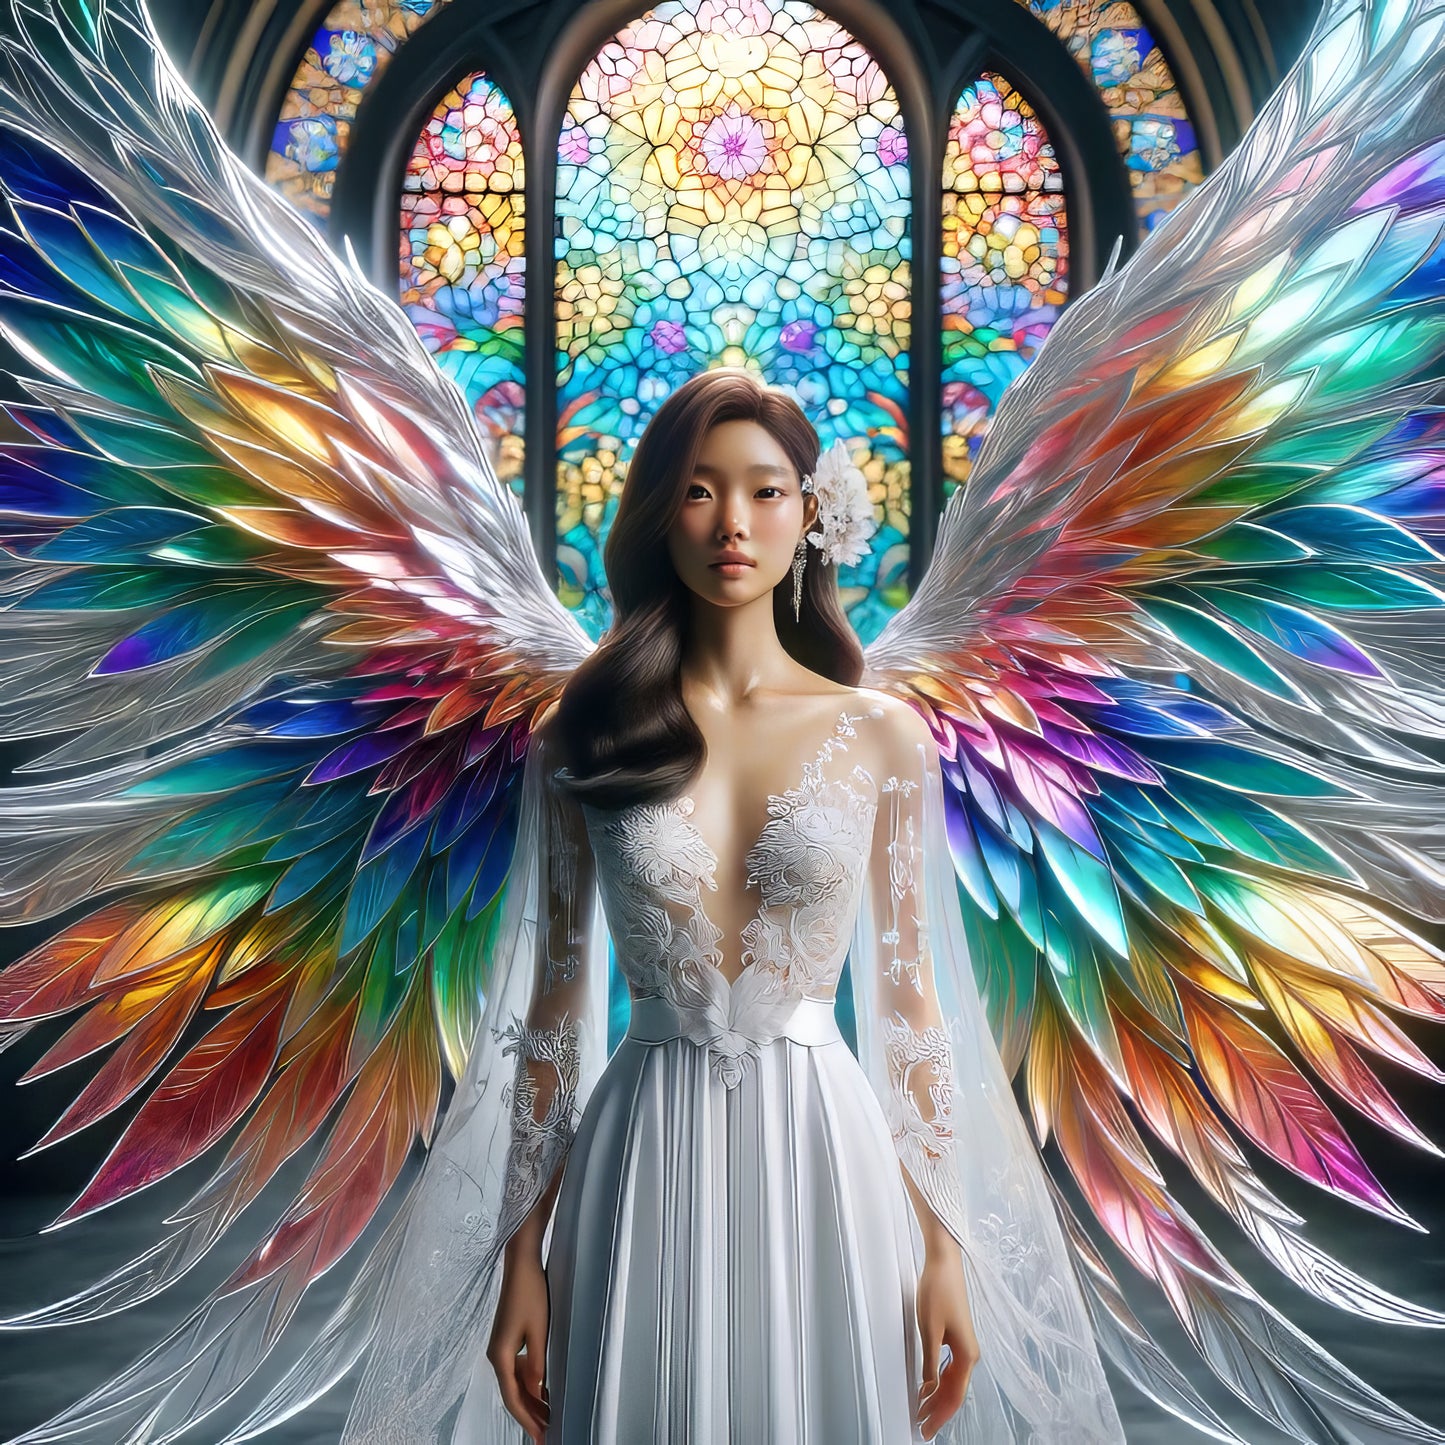 Angel Shining Like Stained Glass - Art Print